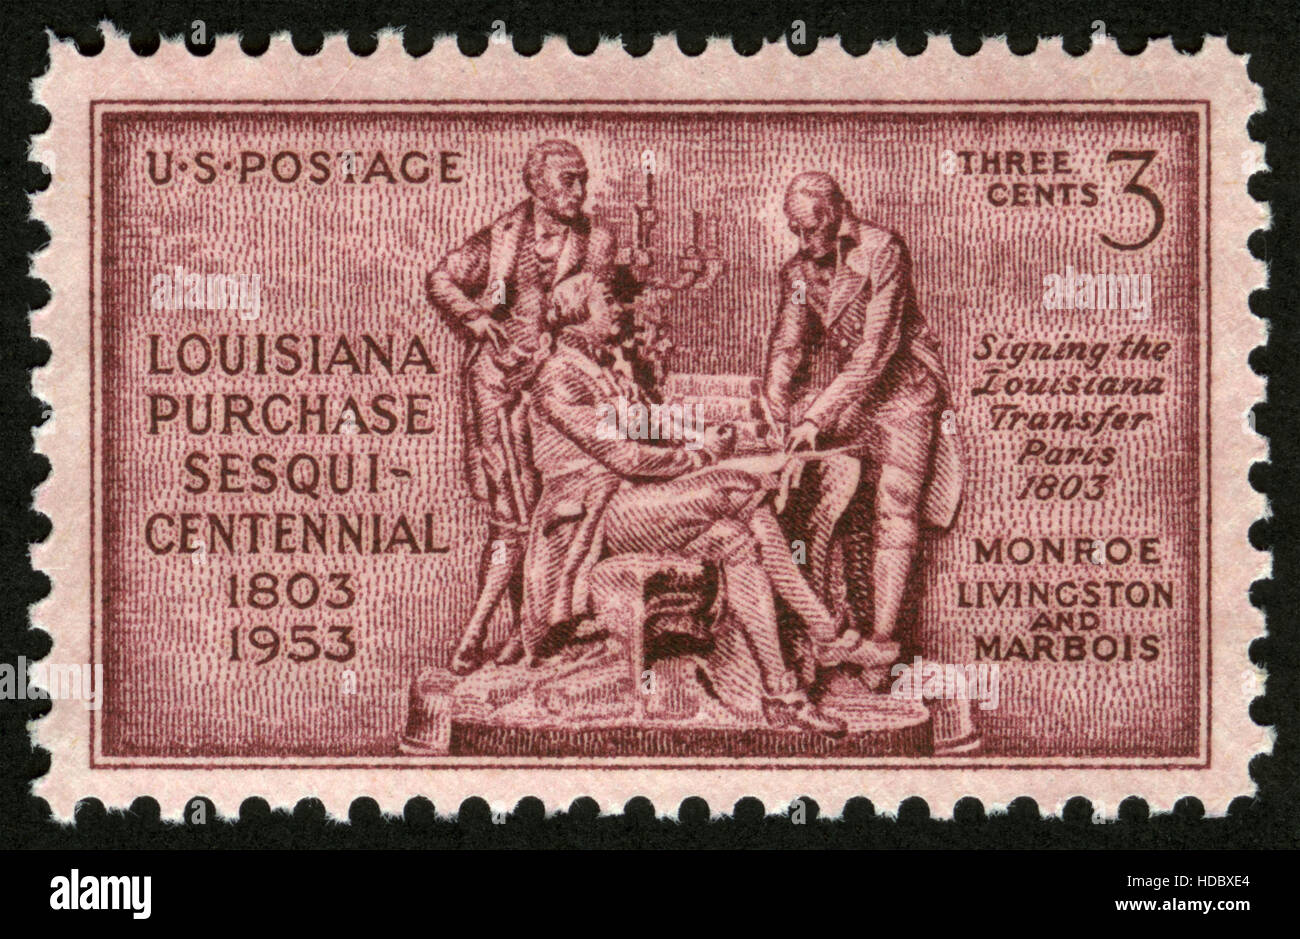 US,circa 1953, postage stamp, Louisiana purchase Sesqui-centennial 1803-1953, Monroe,Livingston, Marbois Stock Photo